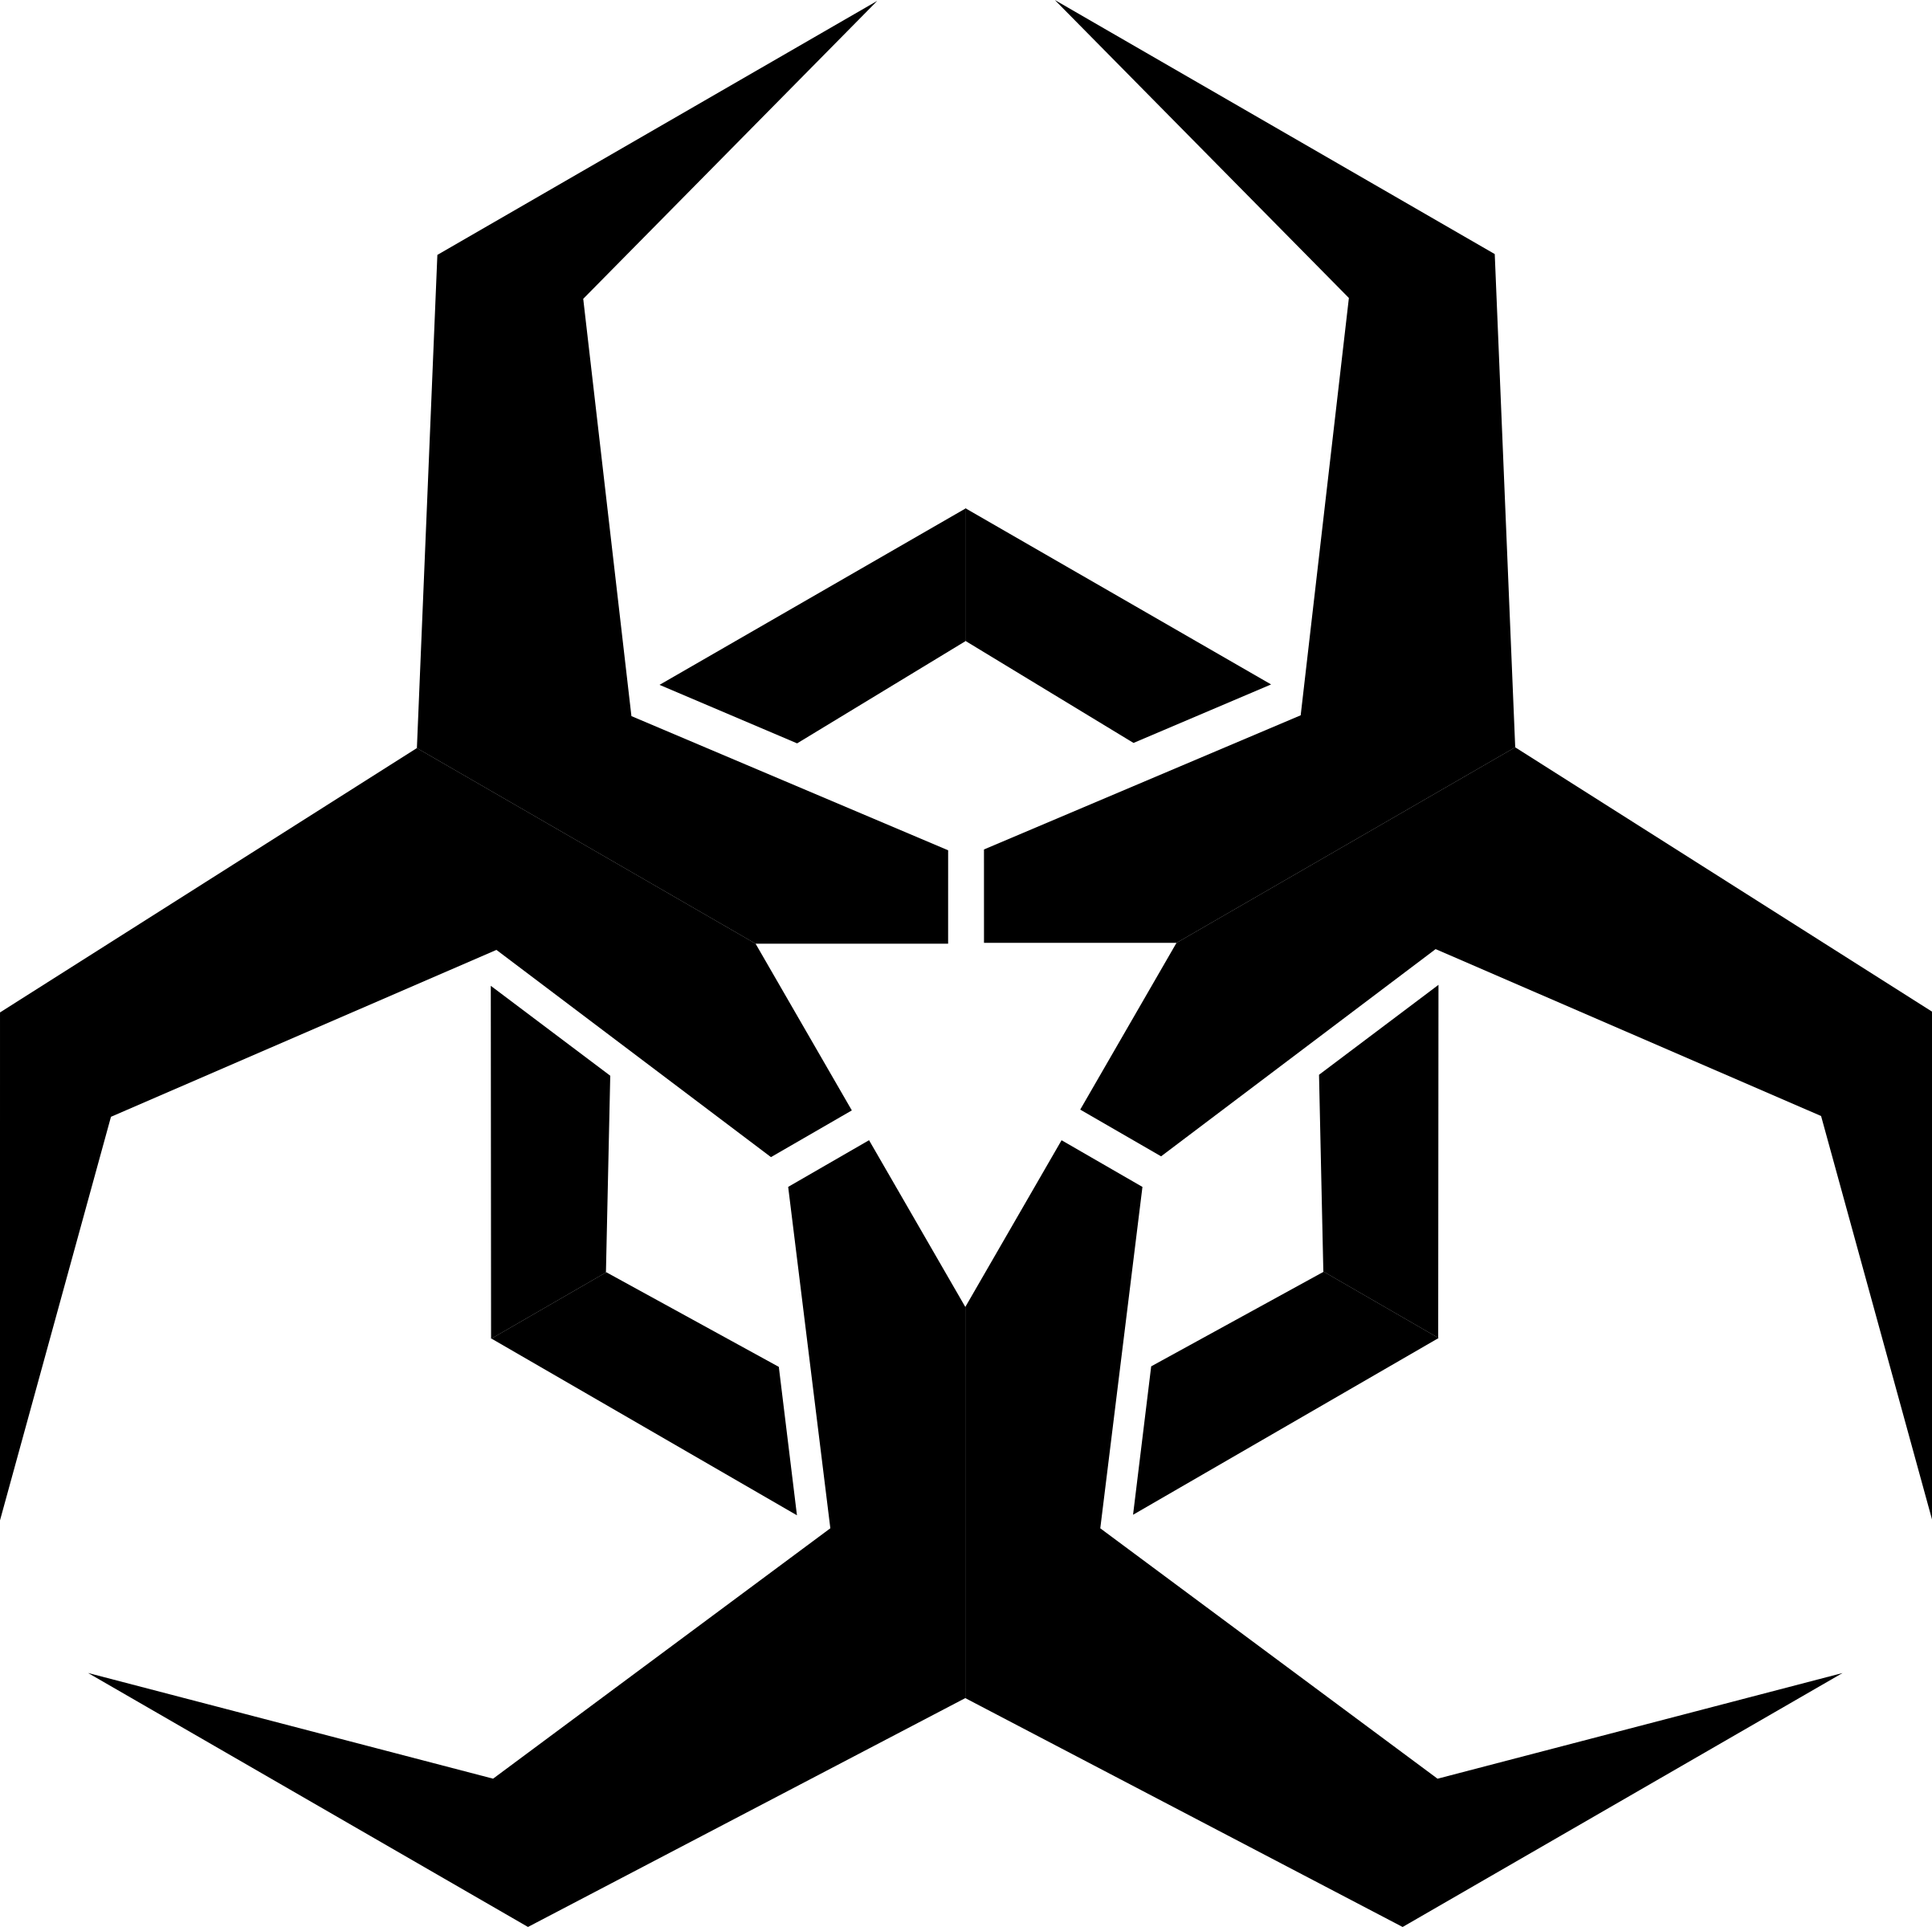 Cool Biohazard Símbolo Logotipo PNG imagem Transparente